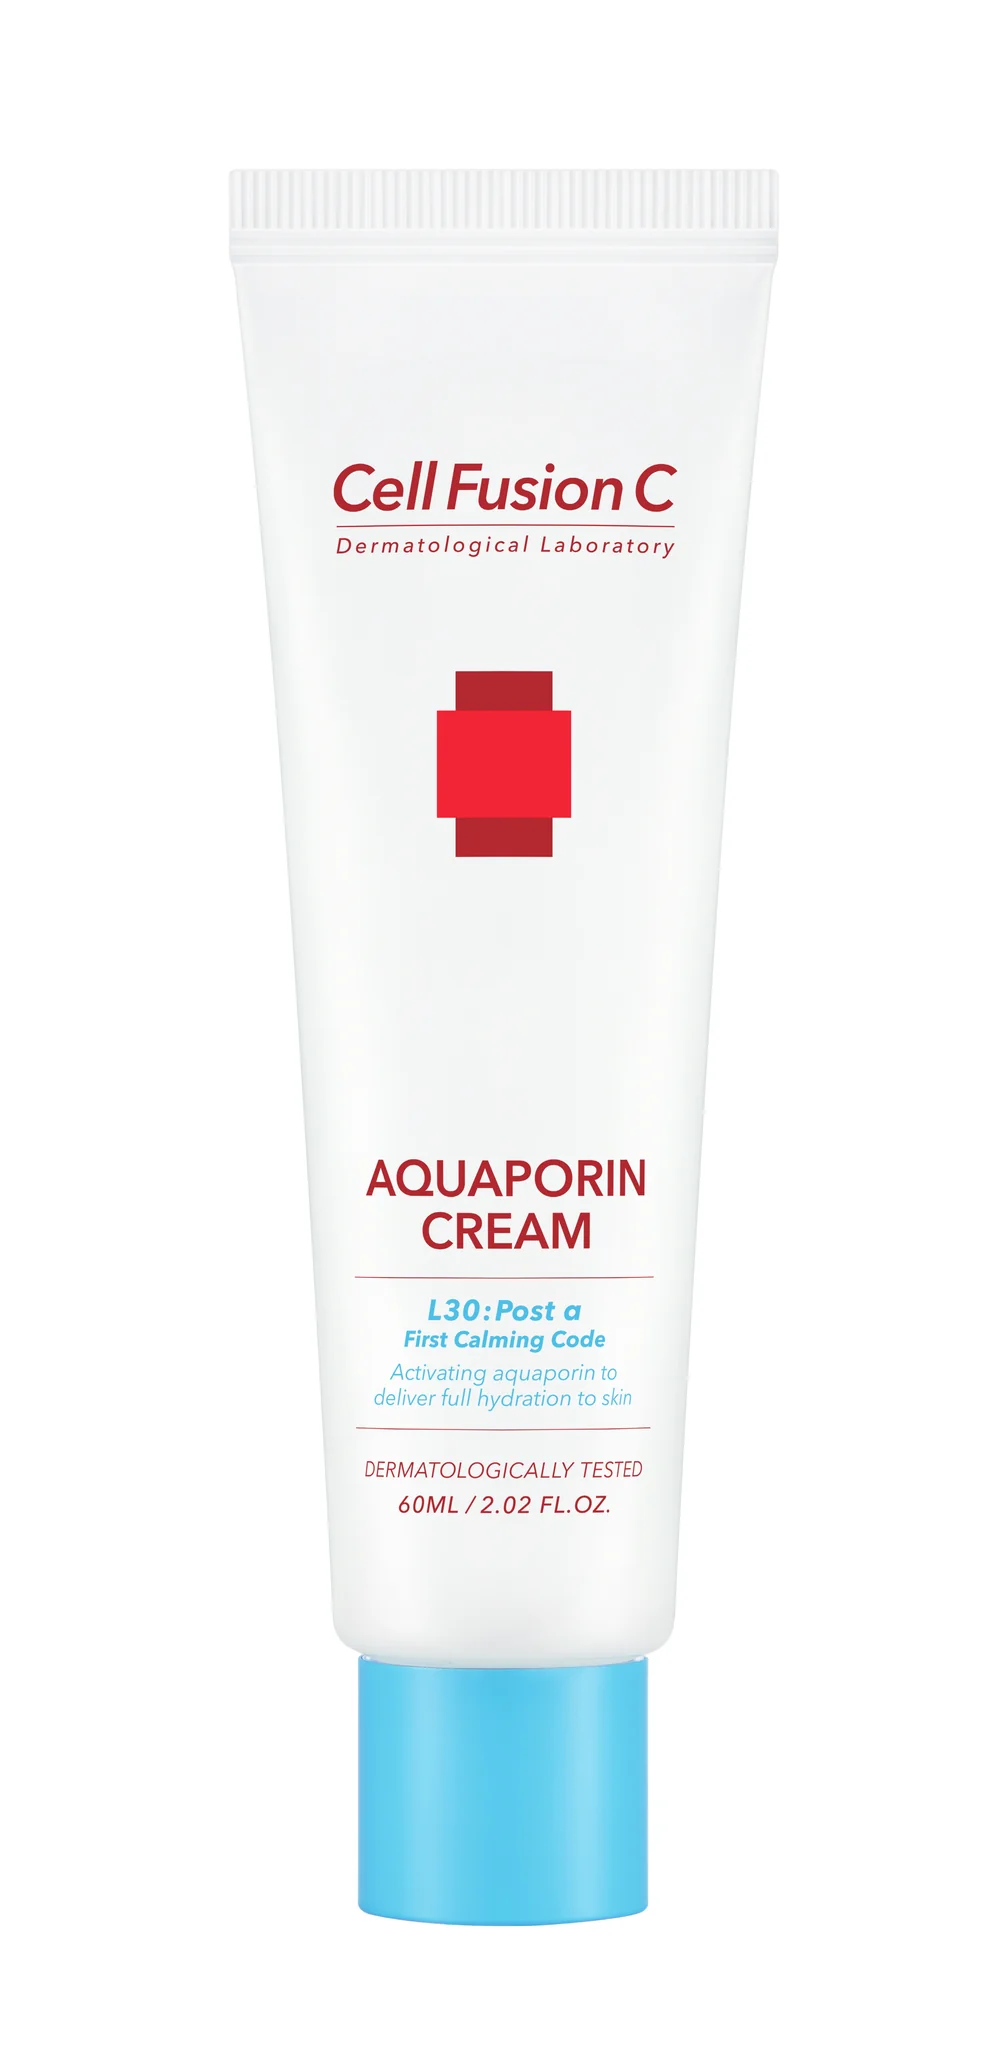 [Cell Fusion C] Post Alpha Aquaporin Cream